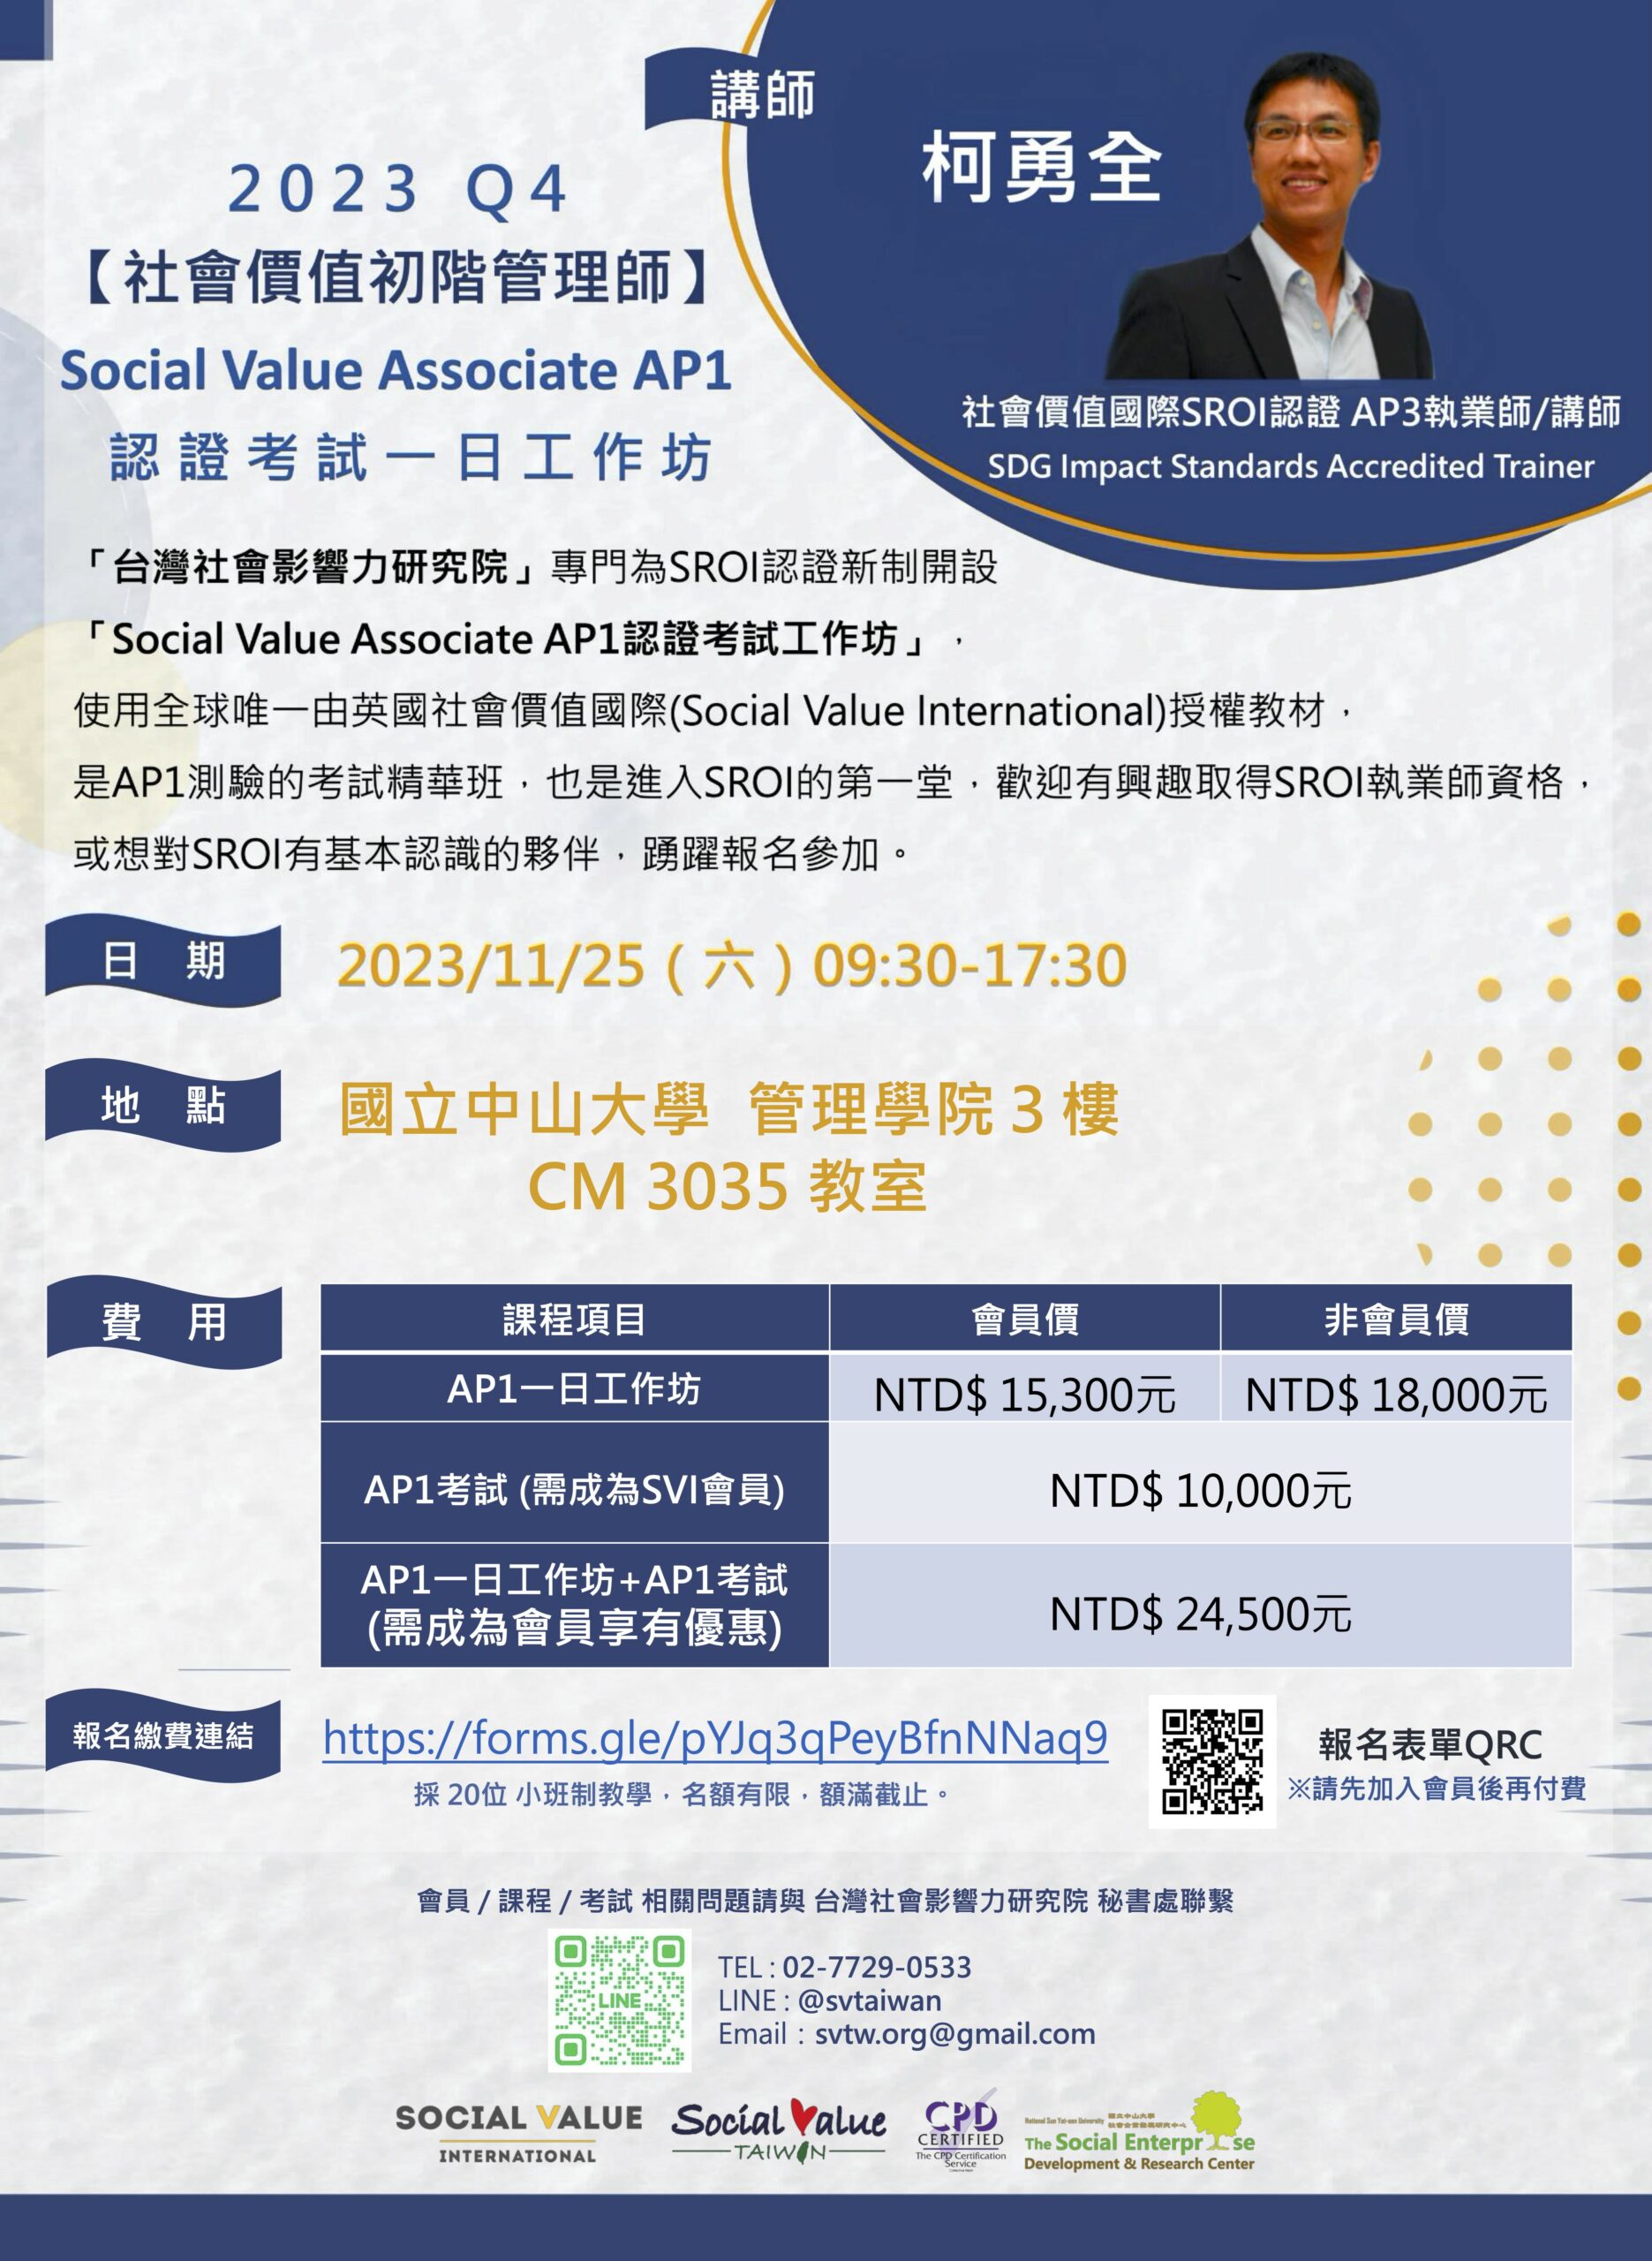 Featured image for “台灣社會影響力研究院與中山大學社會企業發展研究中心合作舉辦「Social Value Assoicate AP1 認證考試工作坊」”